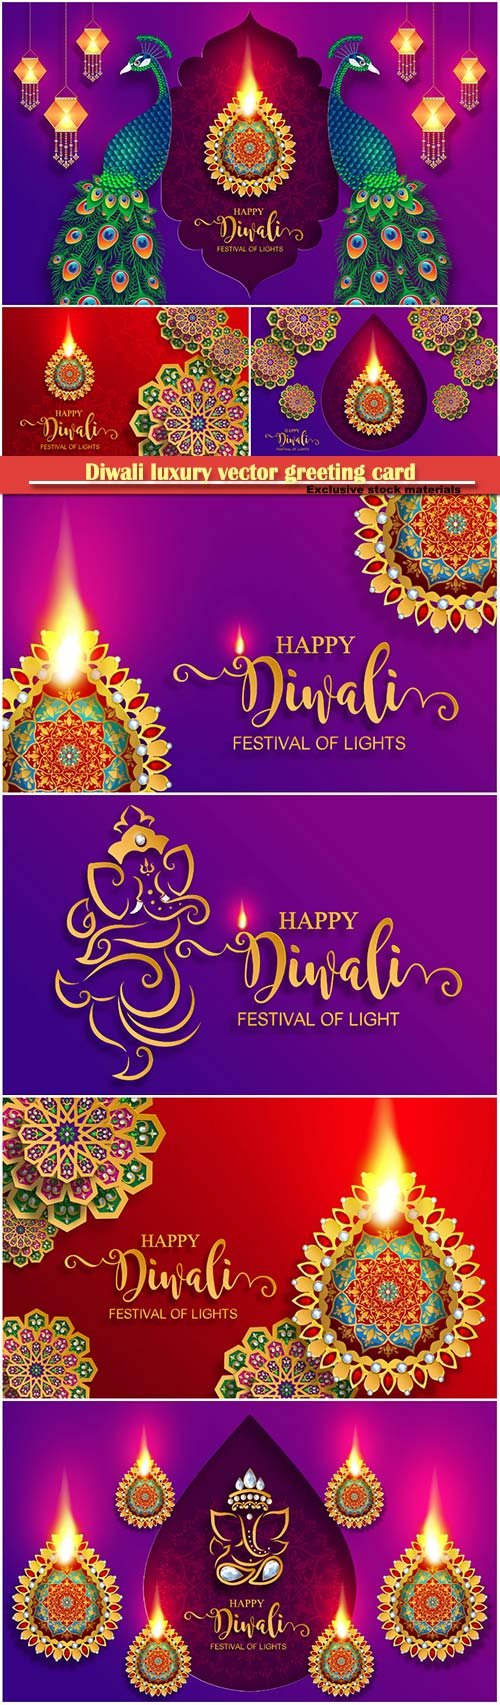 Diwali luxury vector greeting card # 3